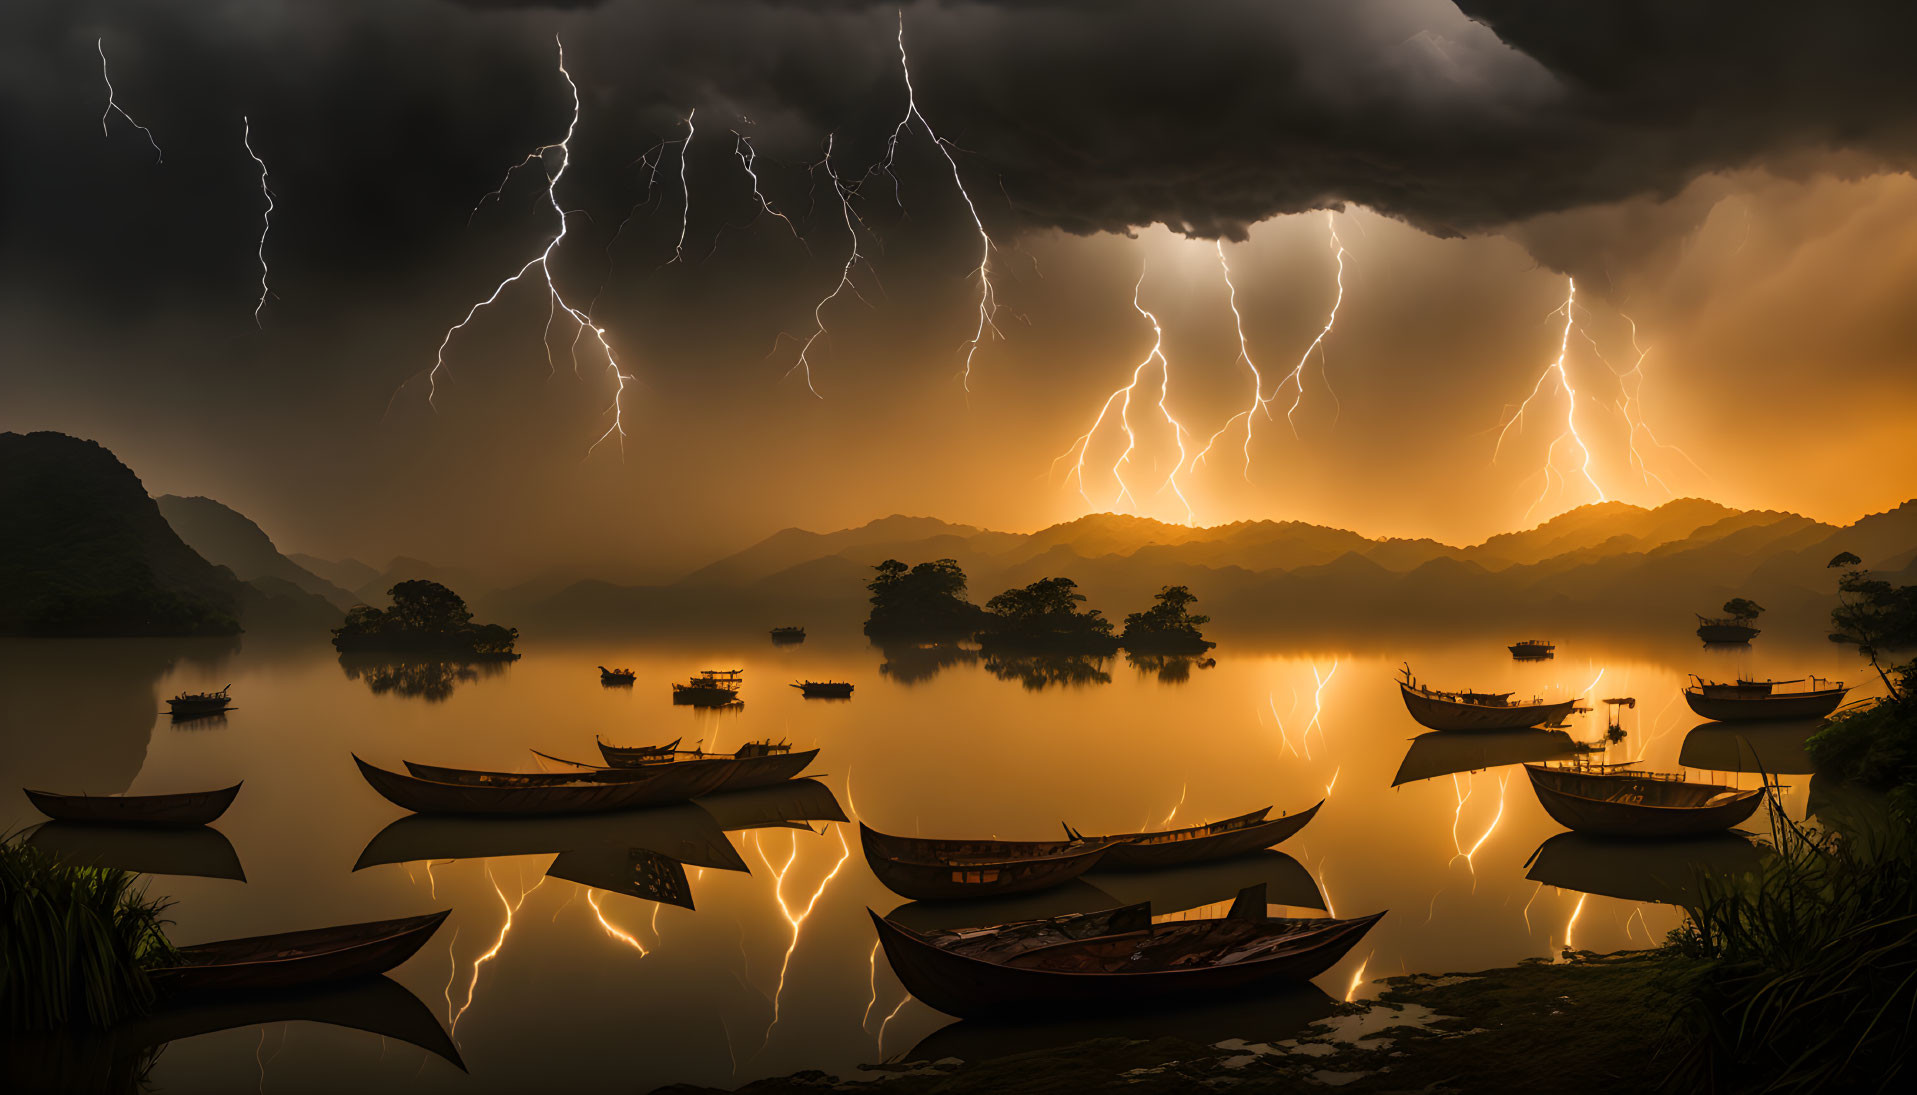 Stormy Lake in Vietnam